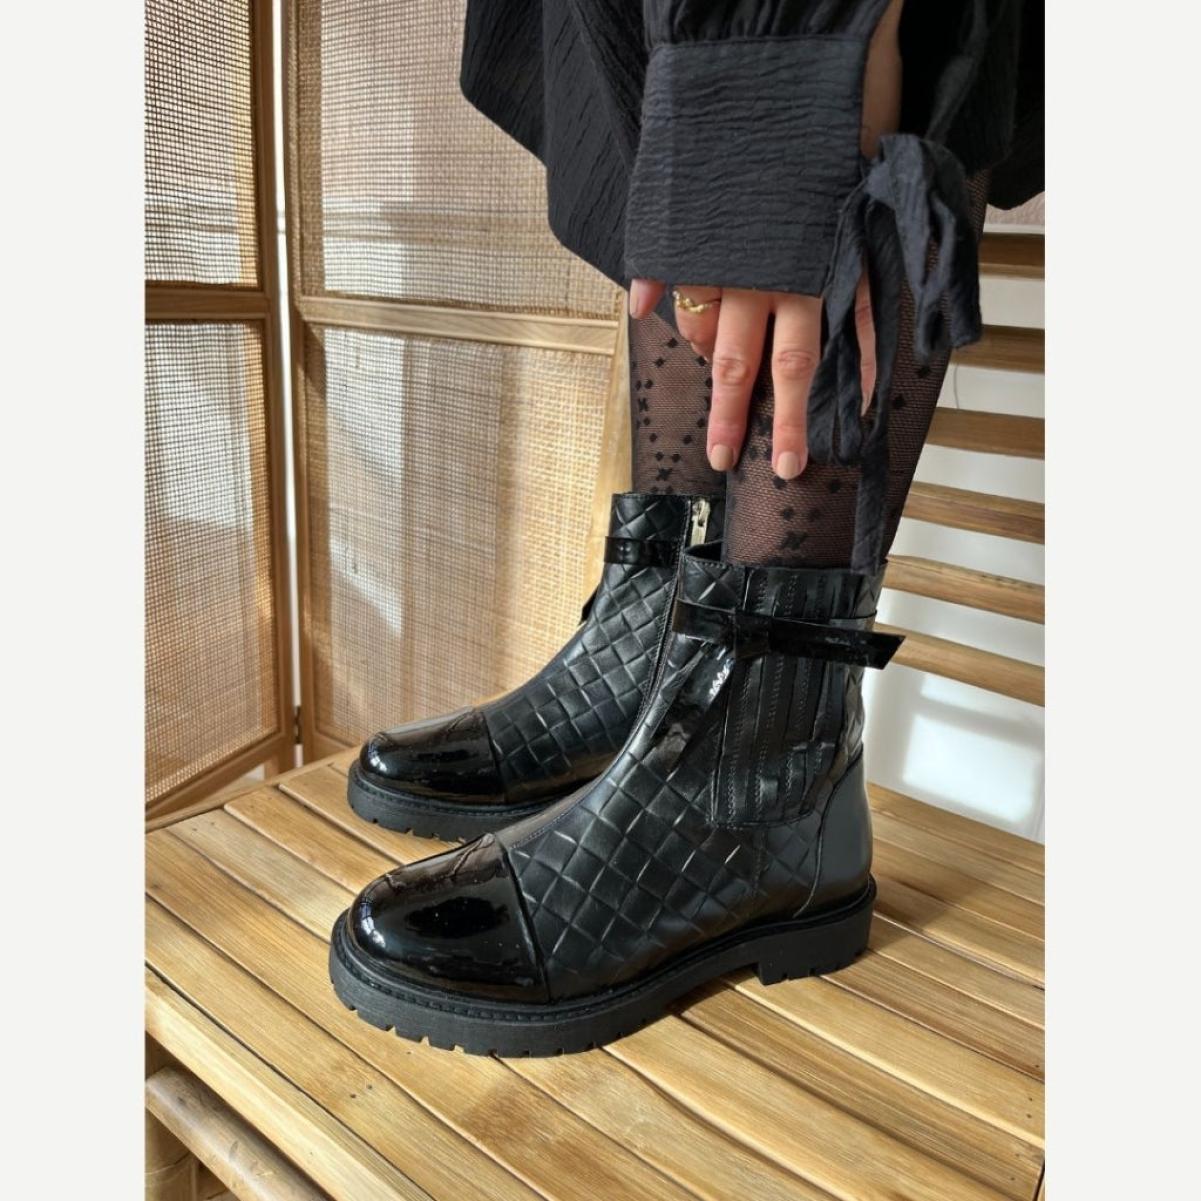 Copenhagen Shoes Women Leather Boots Luxurious Be My Guest - Black Patent - 3